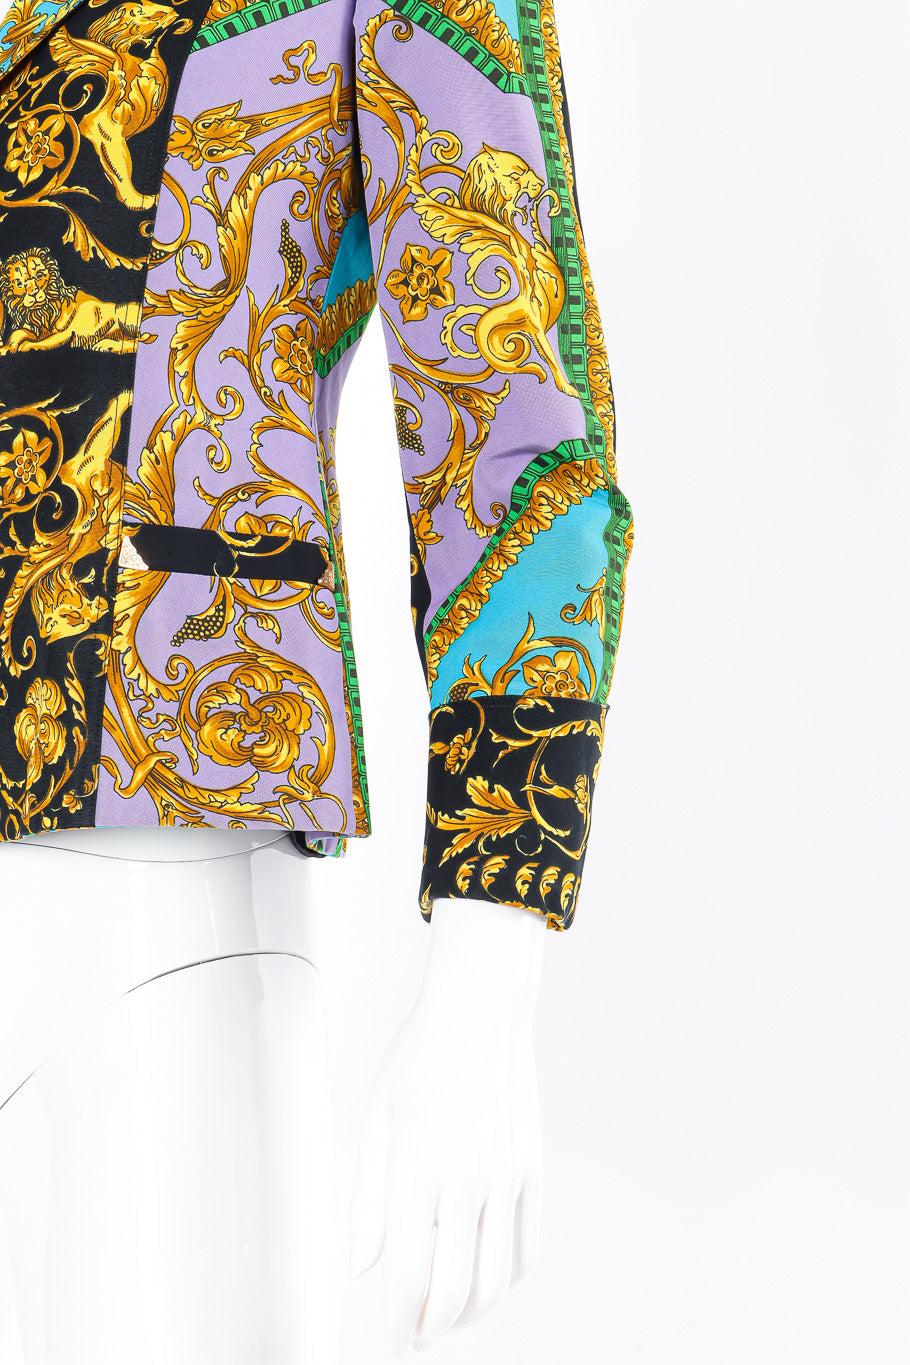 Lion brocade print blazer sleeve detail @recessla